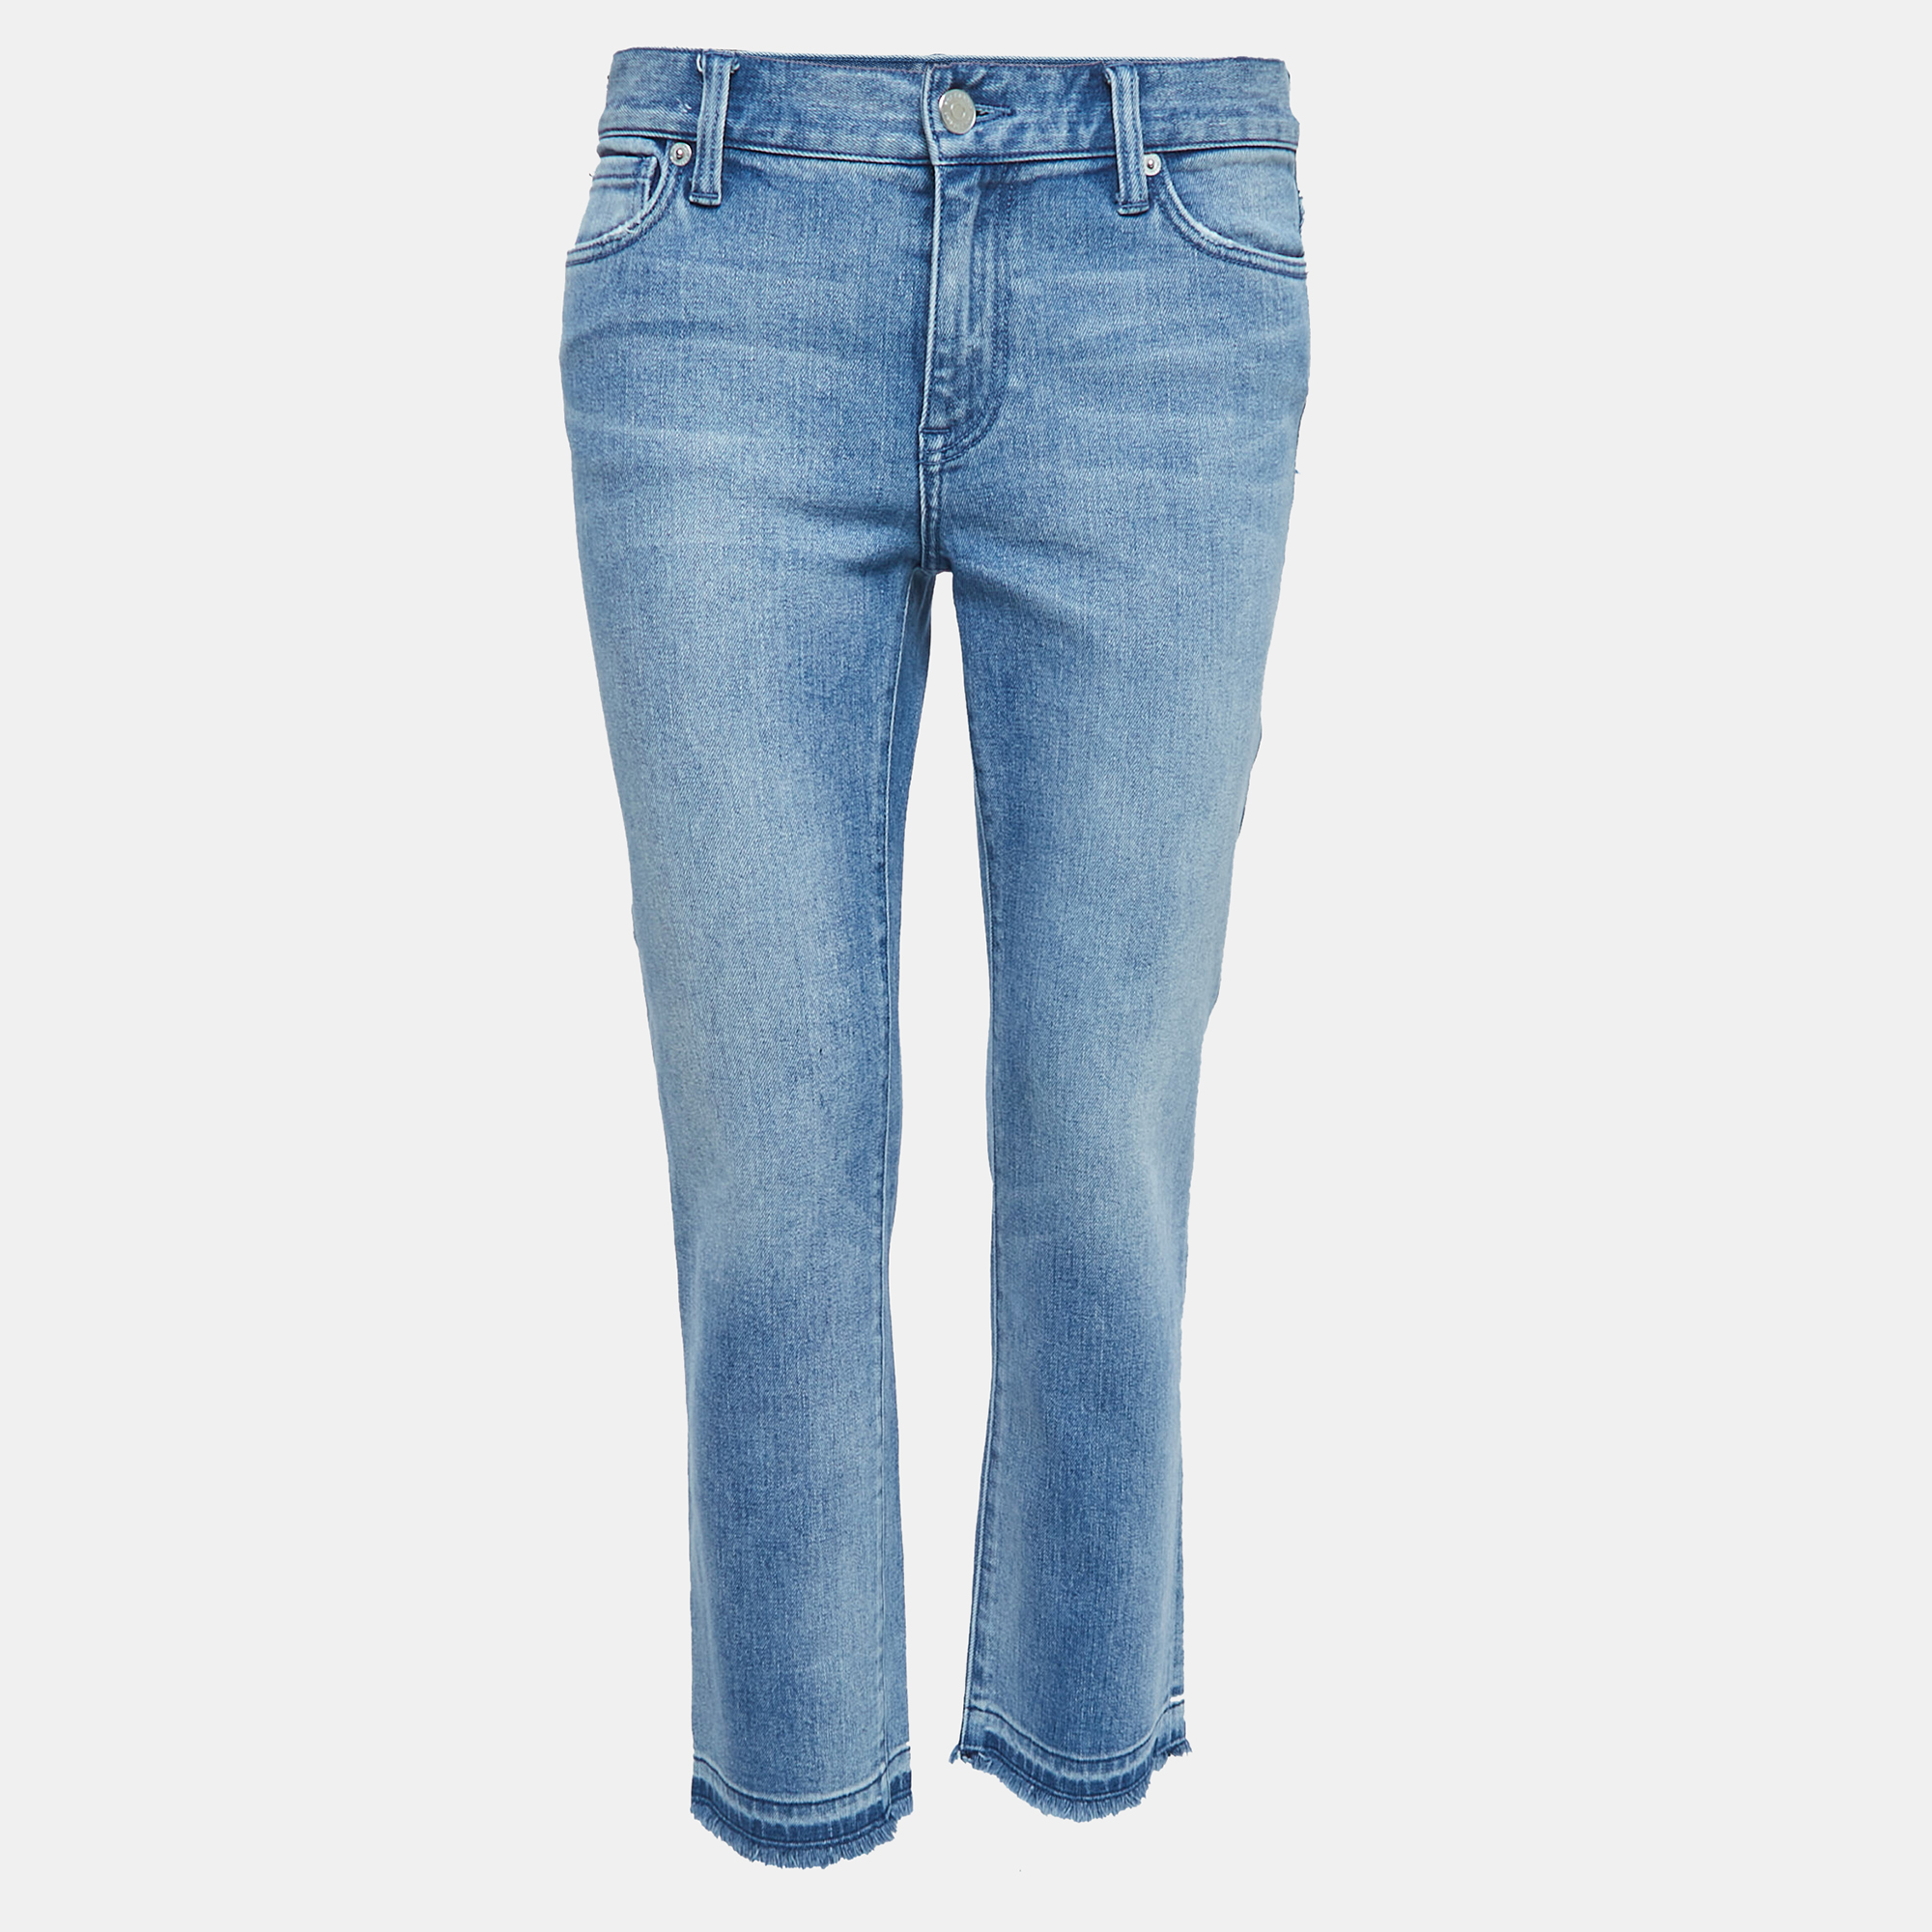 Burberry Blue Washed Denim Slim Crop Jeans S Waist 27